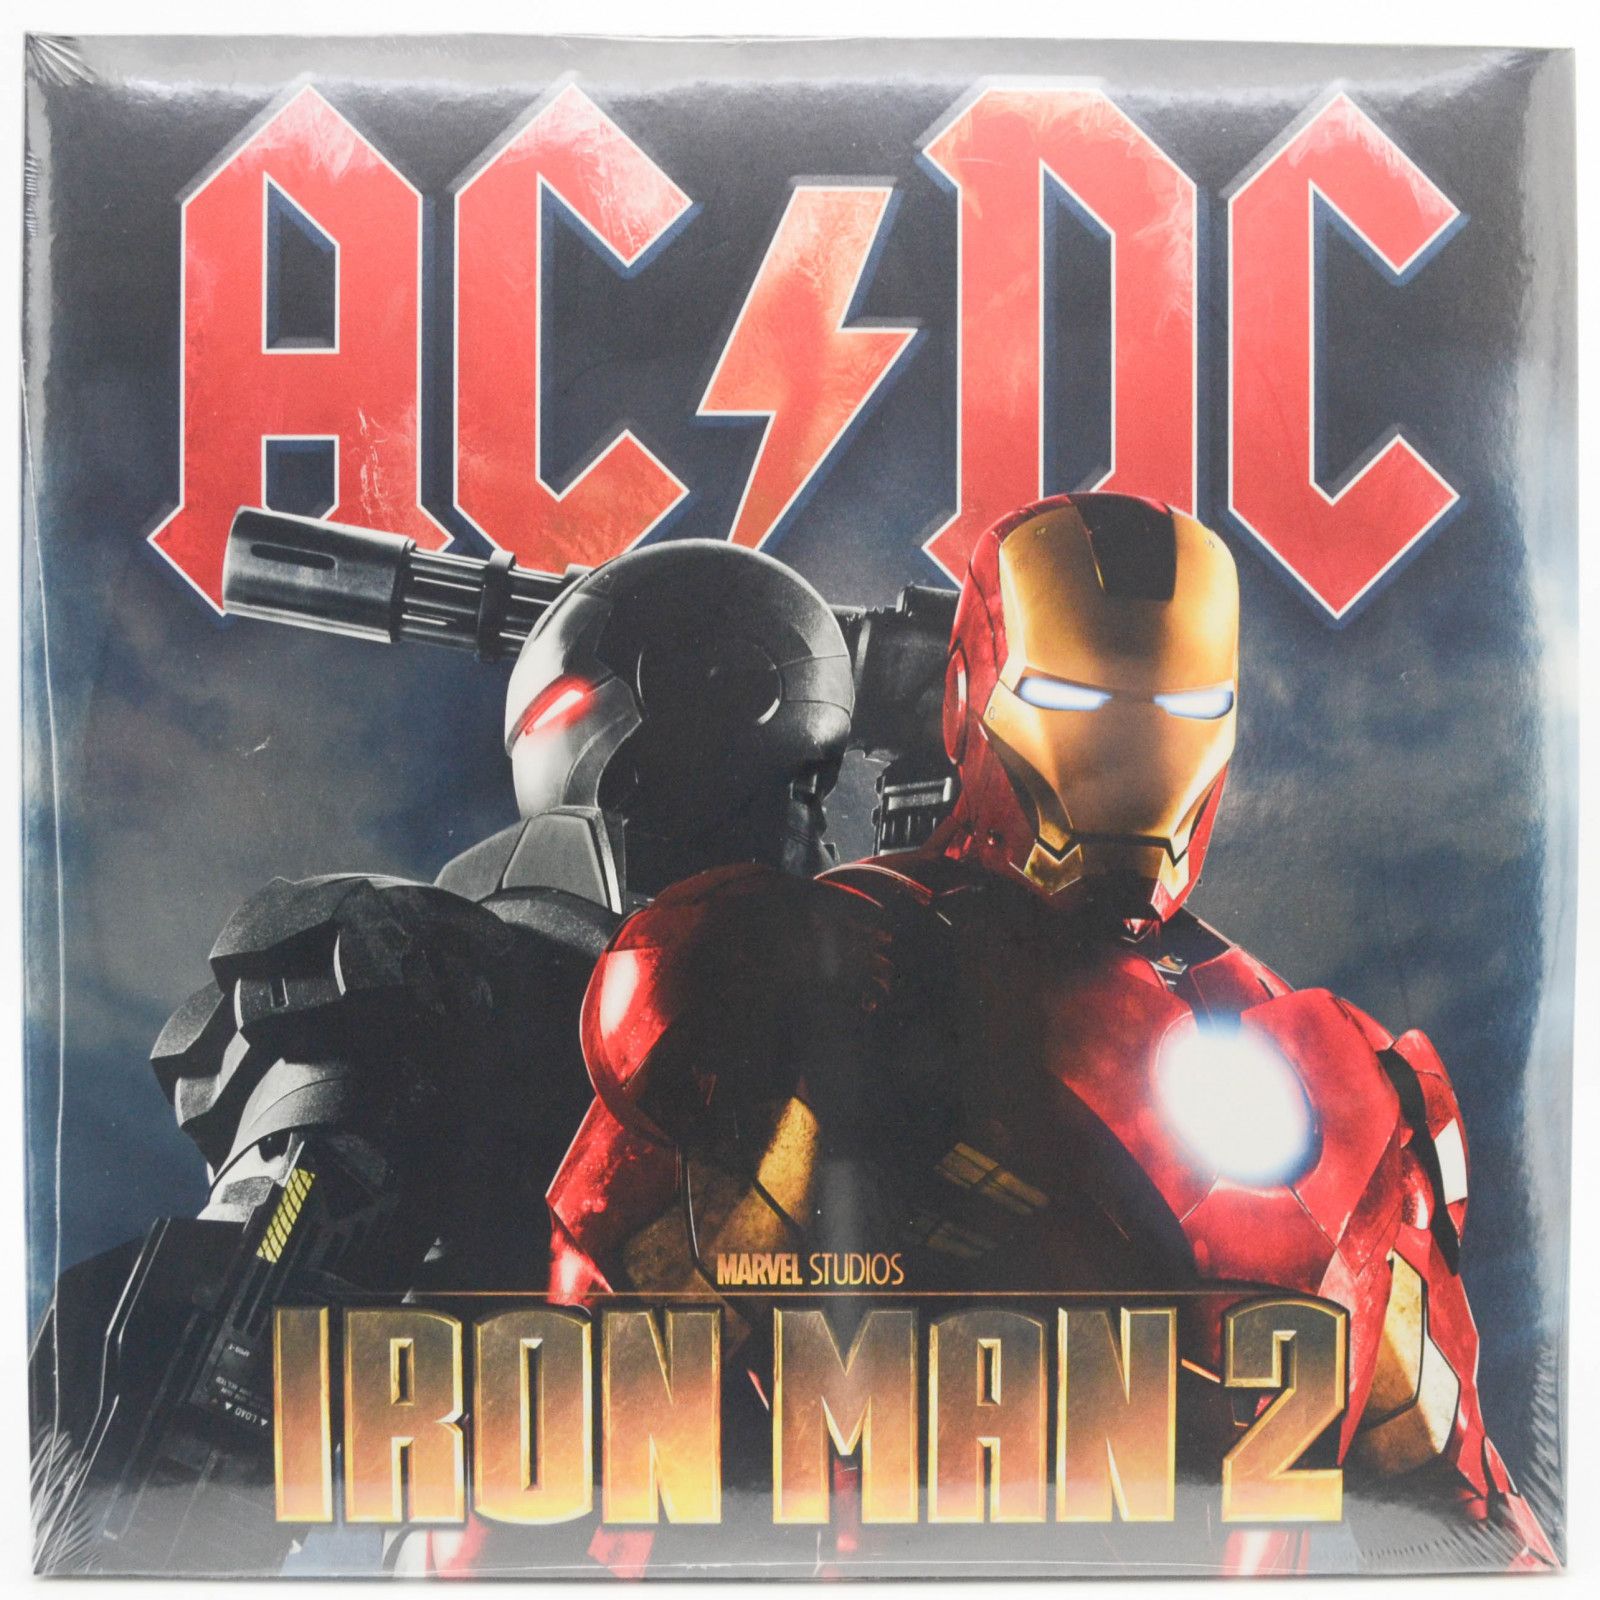 AC/DC — Iron Man 2 (2LP), 2010